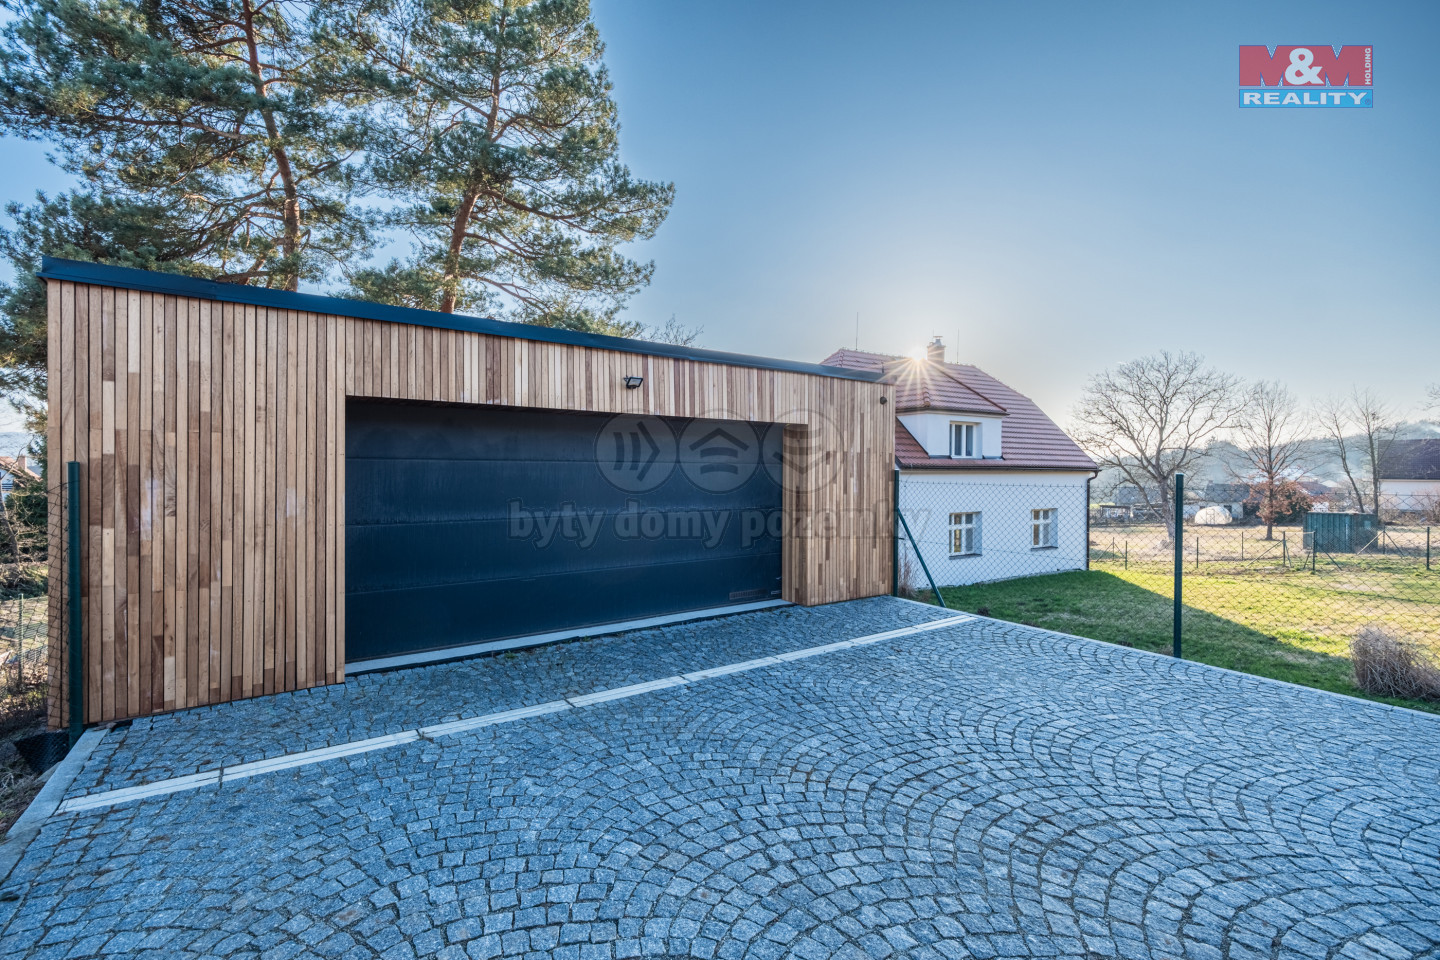 859035 - Prodej rodinného domu, 238 m², Bukovany